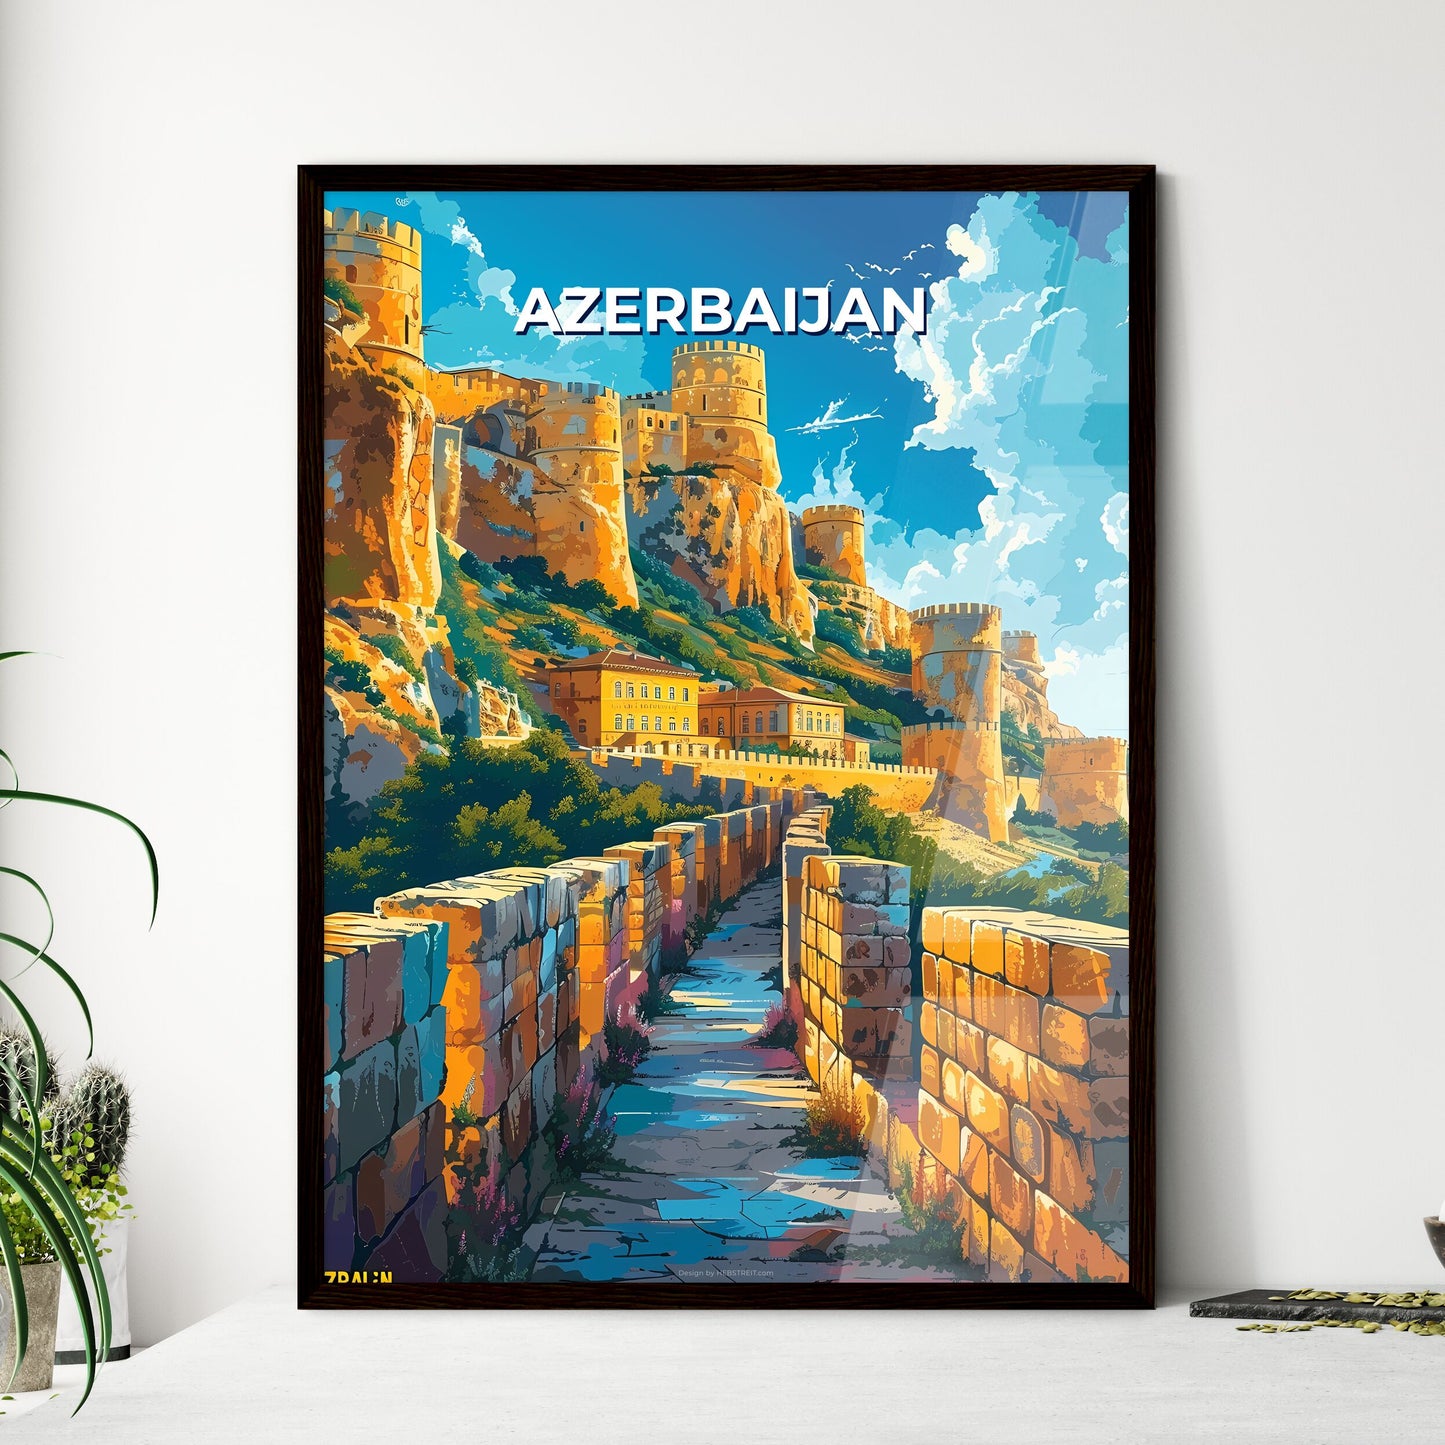 Artistic Stone Castle Wall Painting, Vibrant Azerbaijan European Architecture